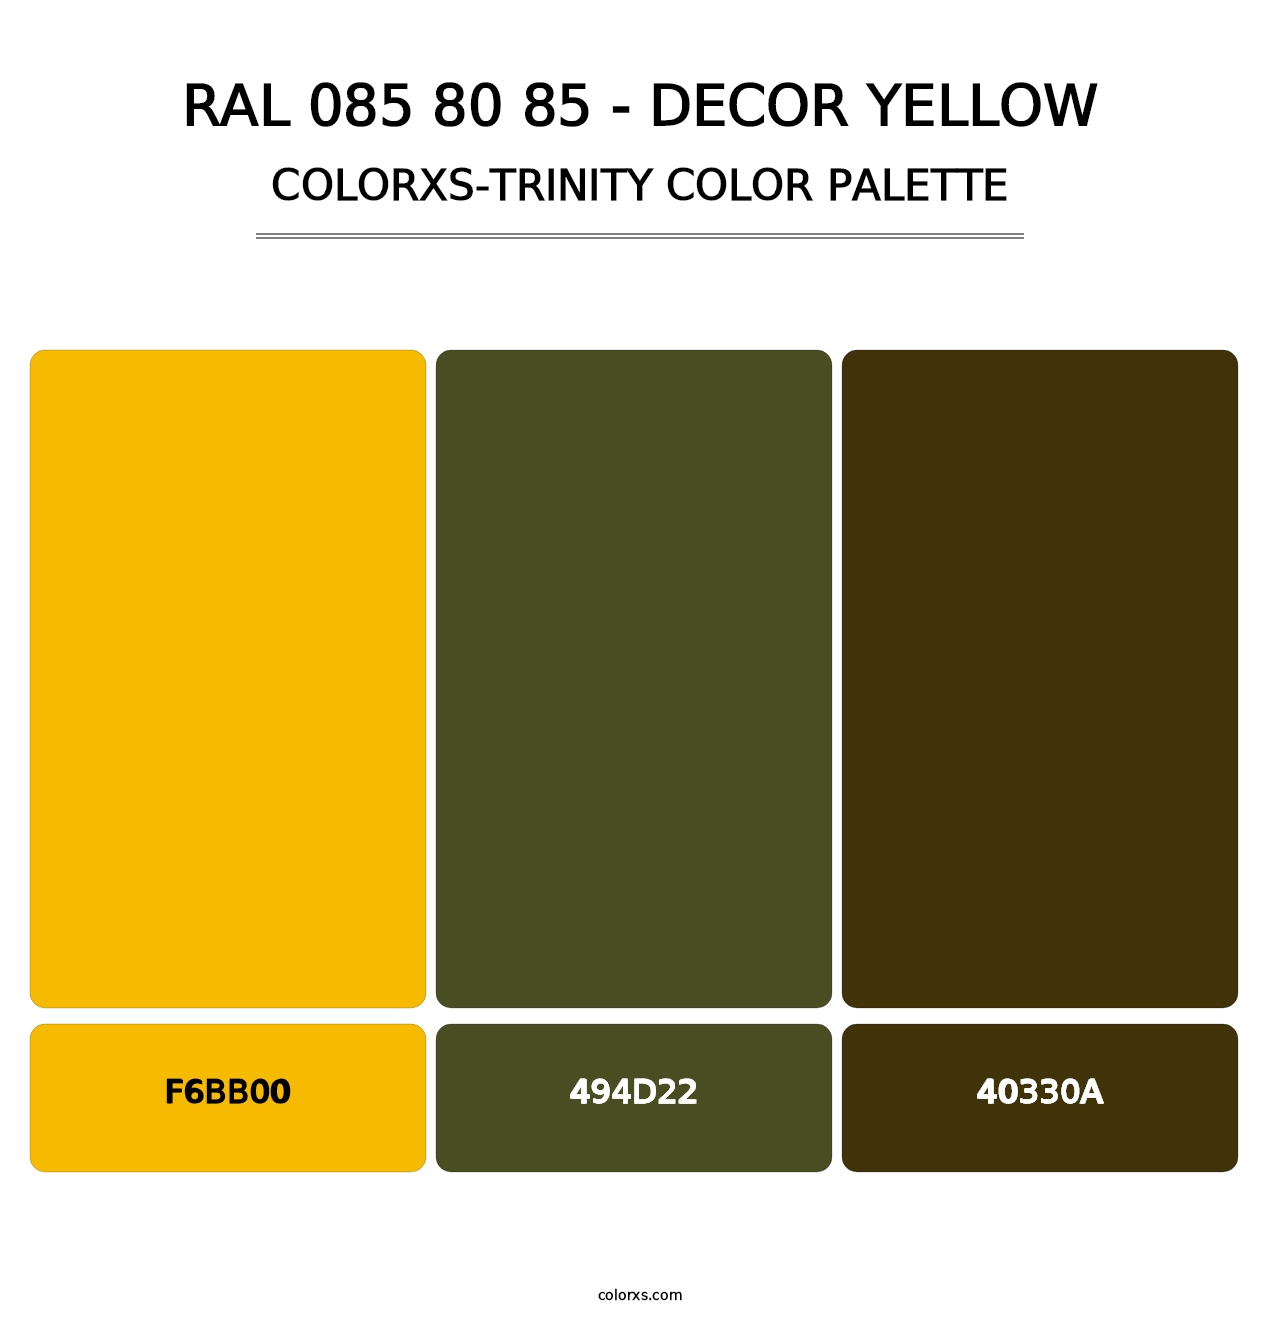 RAL 085 80 85 - Decor Yellow - Colorxs Trinity Palette